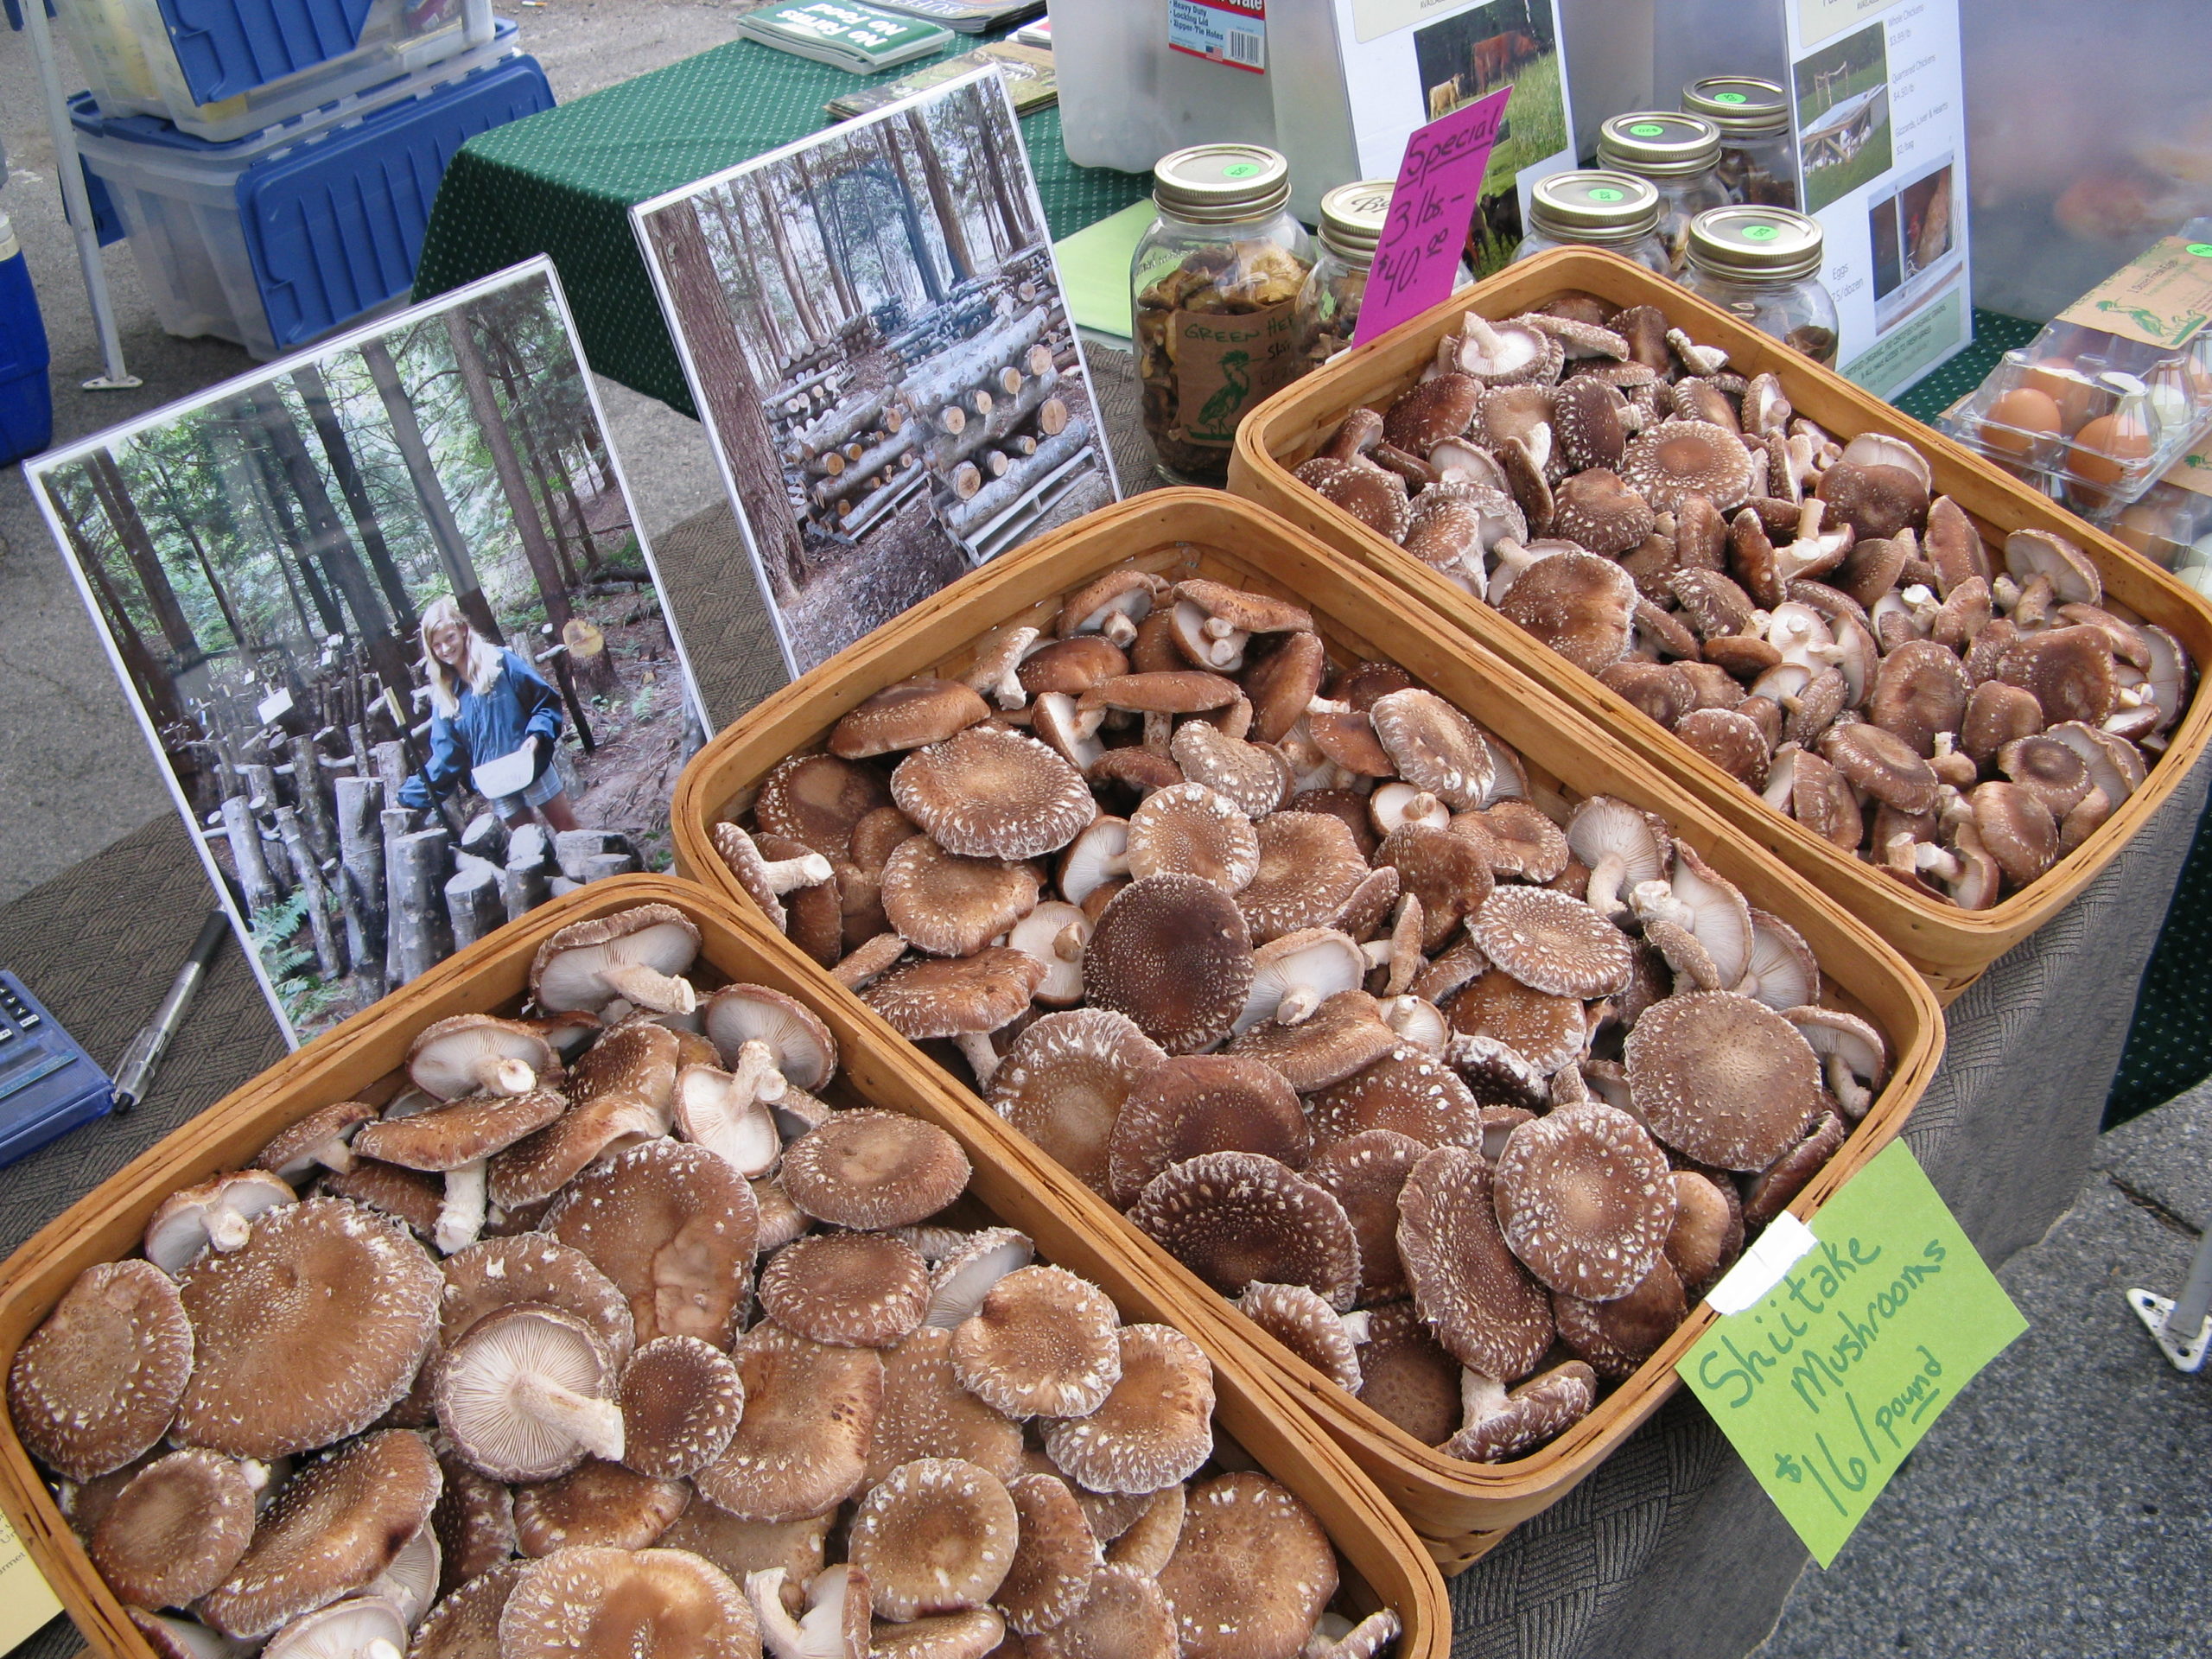 Bins of shiitake mushroom on display. There are photos of the shiitake logs and stacks behind the bins.